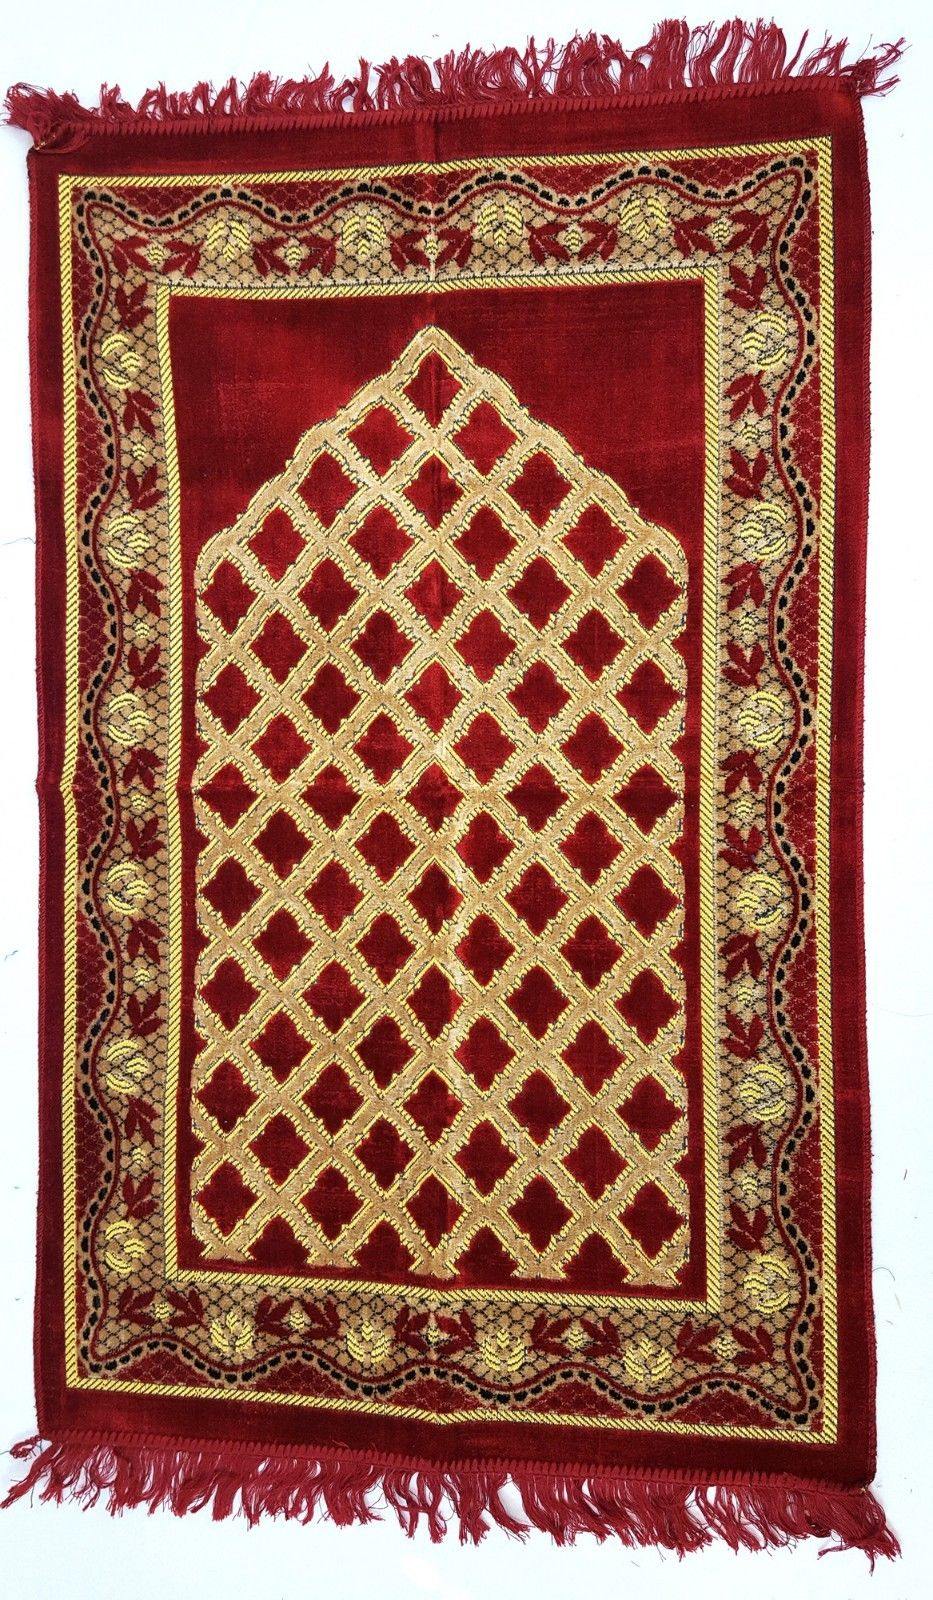 Turkish Soft Islamic Muslim Prayer Rug Namaz Carpet 110x70cm (43*27inch) - Arabian Shopping Zone